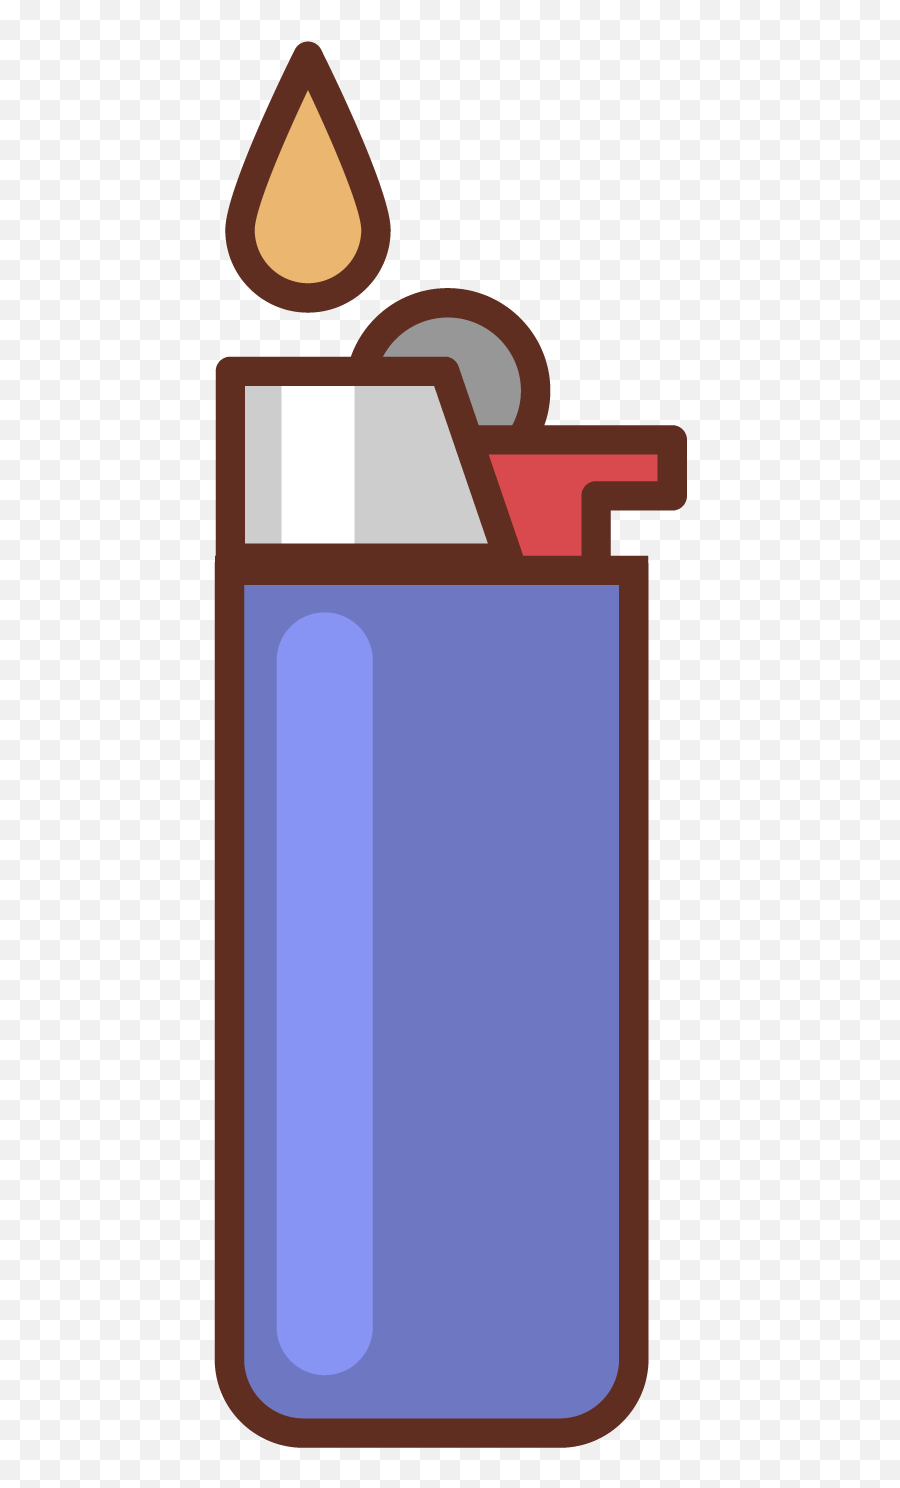 Lighter Pixel Icon - Lighter Pixel Png Transparent Cartoon Lighter Clipart Transparent,Lighter Png